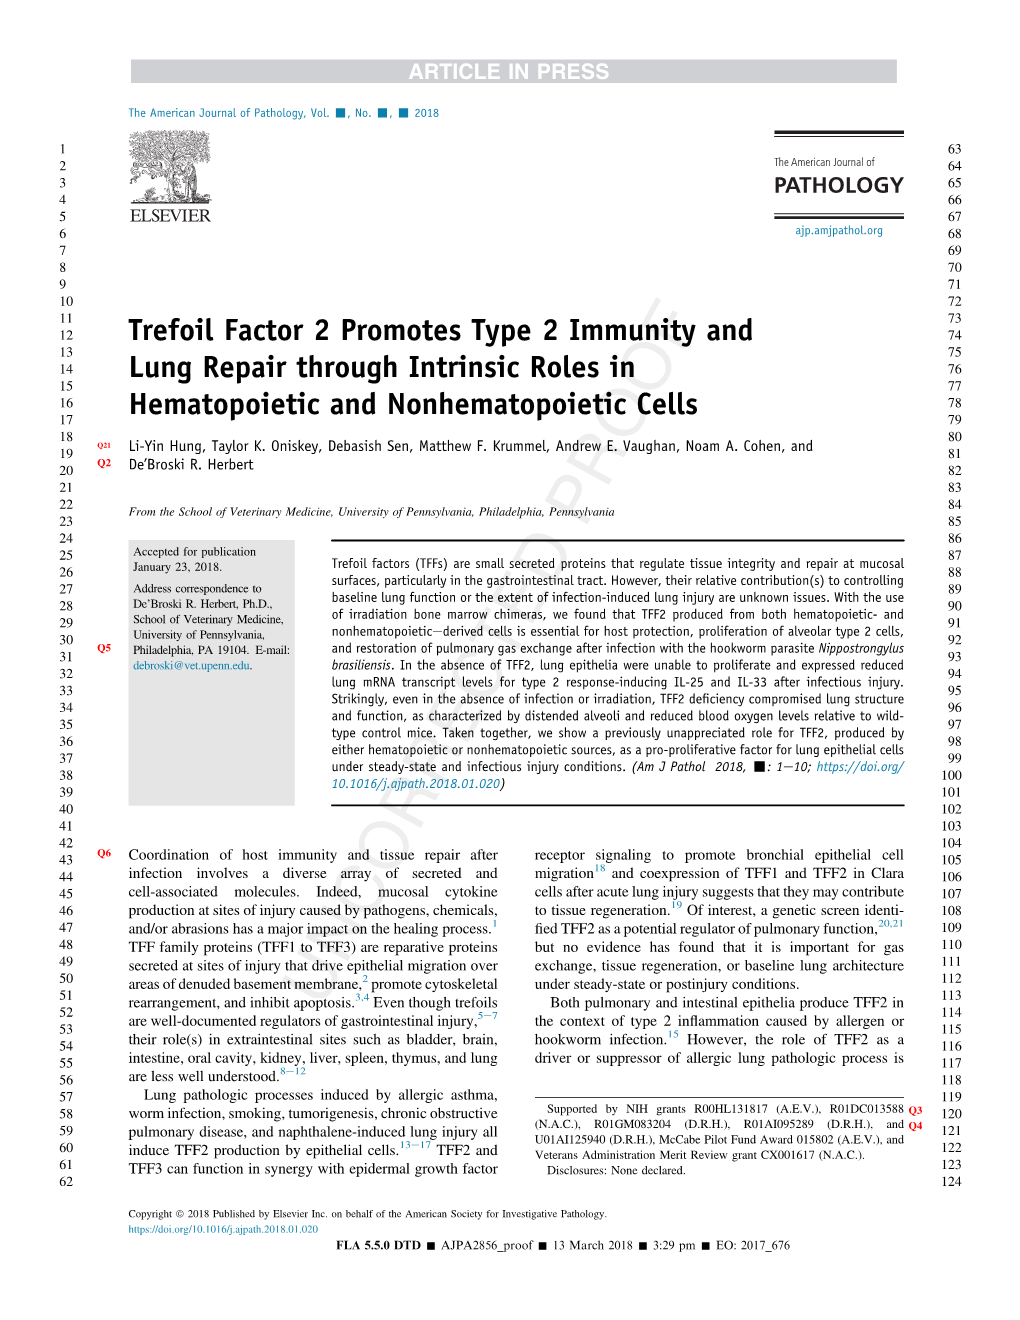 Trefoil Factor 2 Promotes Type 2 Immunity and Lung Repair Through